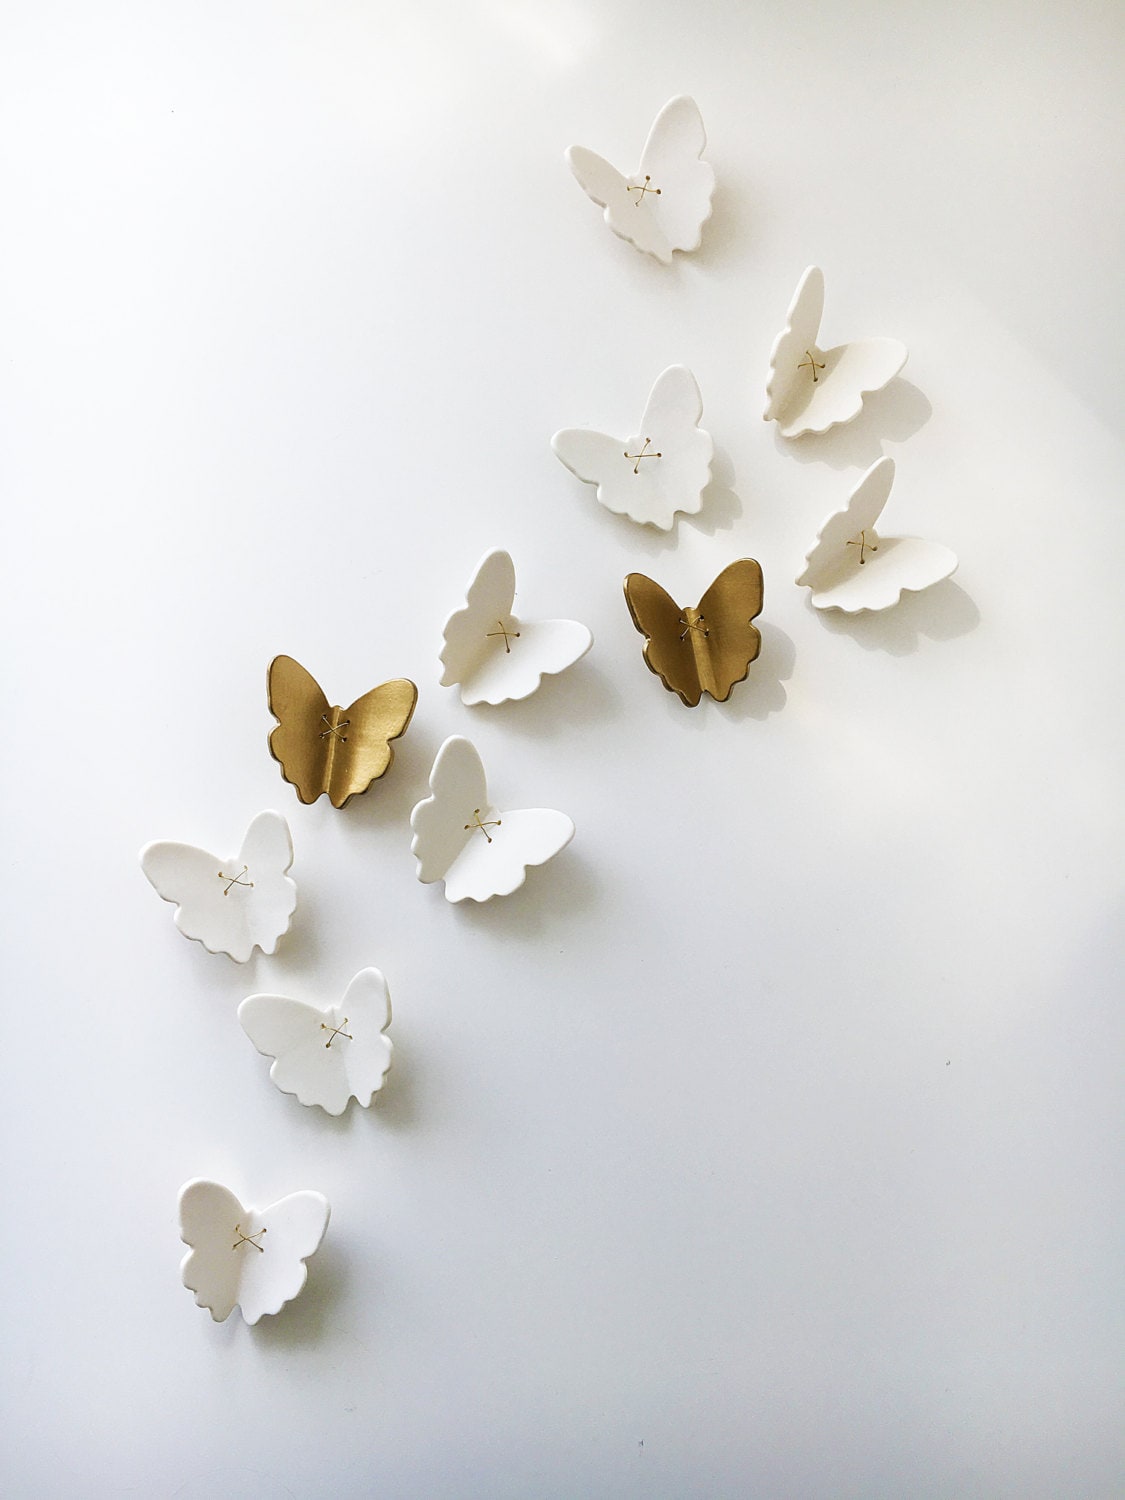 3D Butterfly wall art 7 Gold + white porcelain ceramic butterflies wall art sculpture Set of 7 butterflies with metal wire (5 white 2 gold)